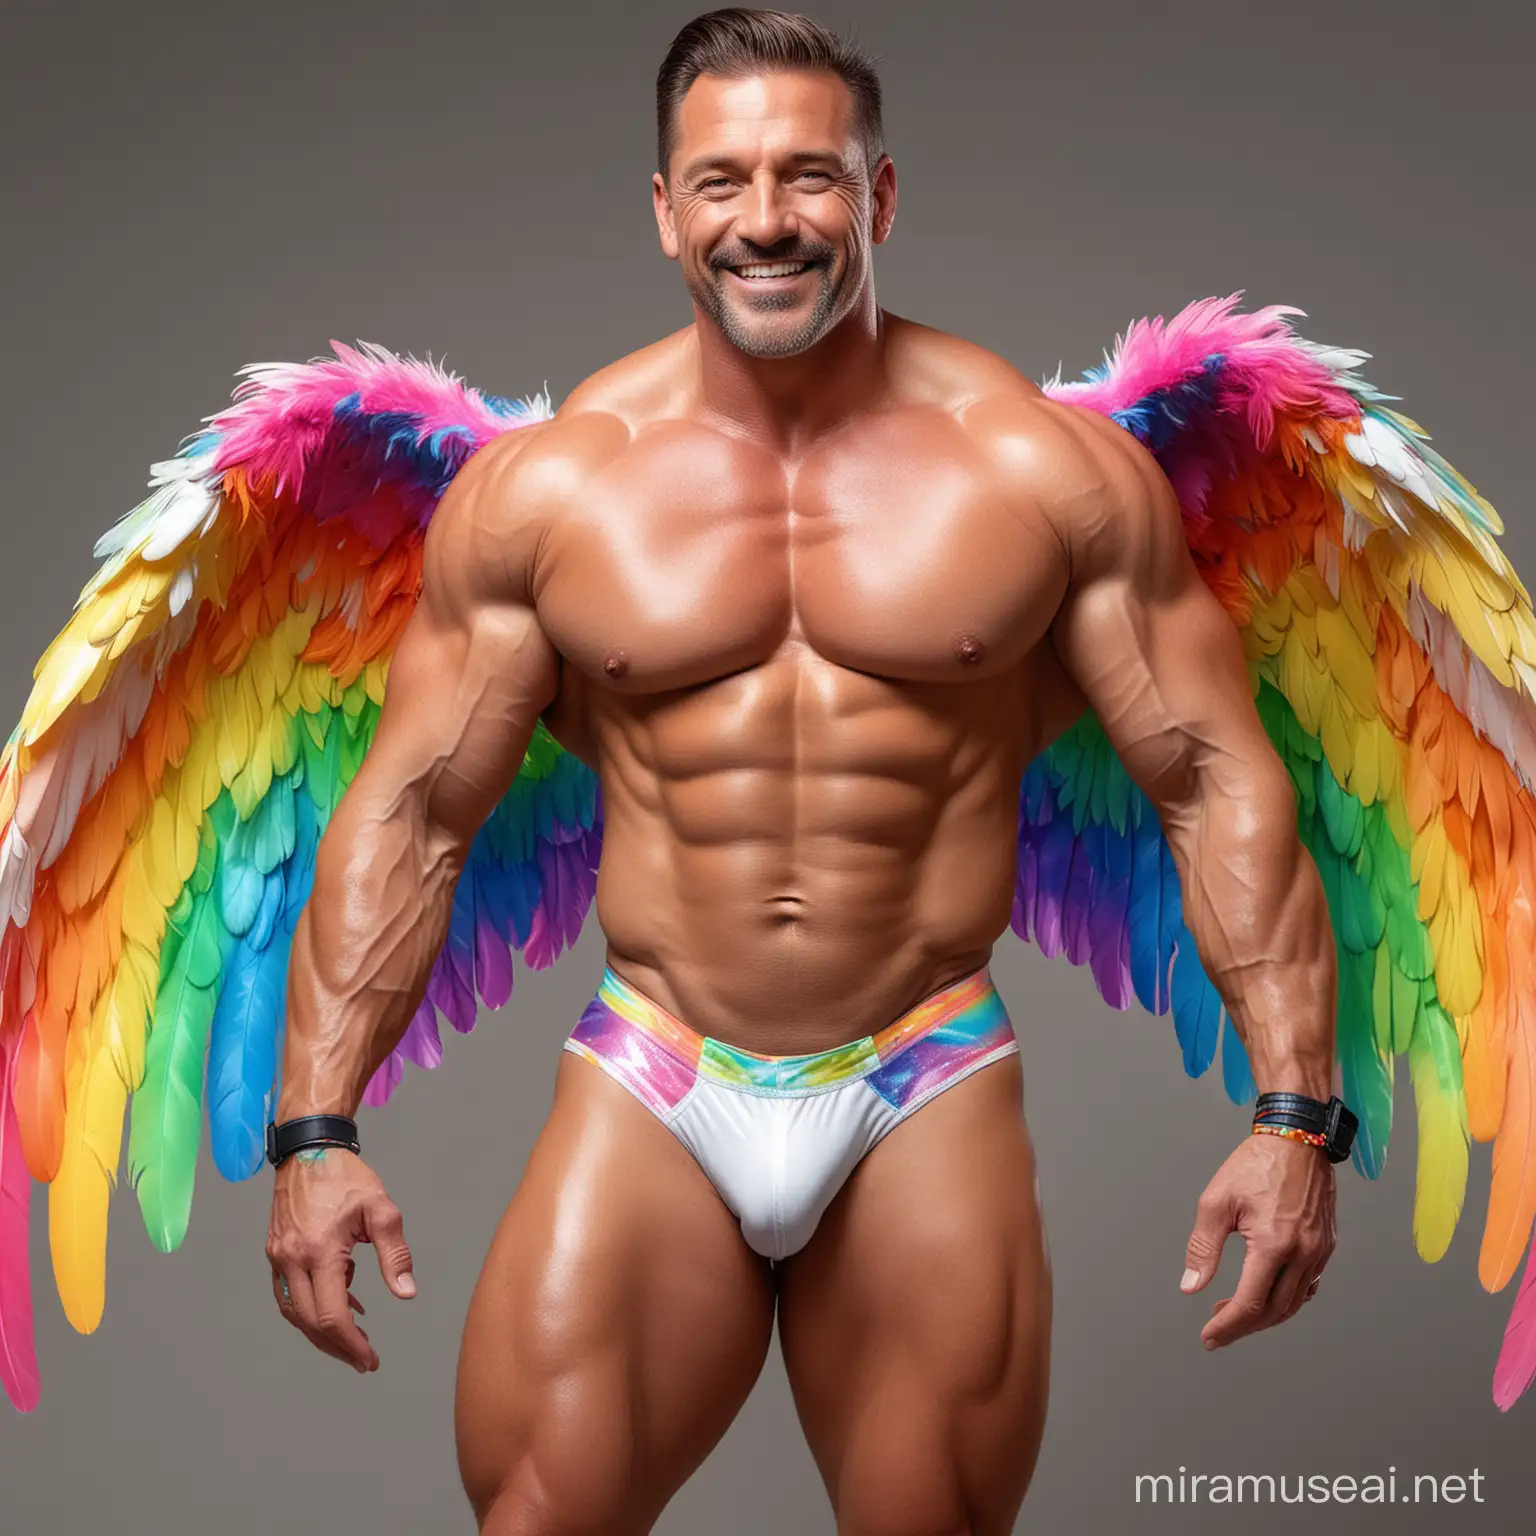 Joyful Bodybuilder Dad in Rainbow Jacket with Eagle Wings Flexing